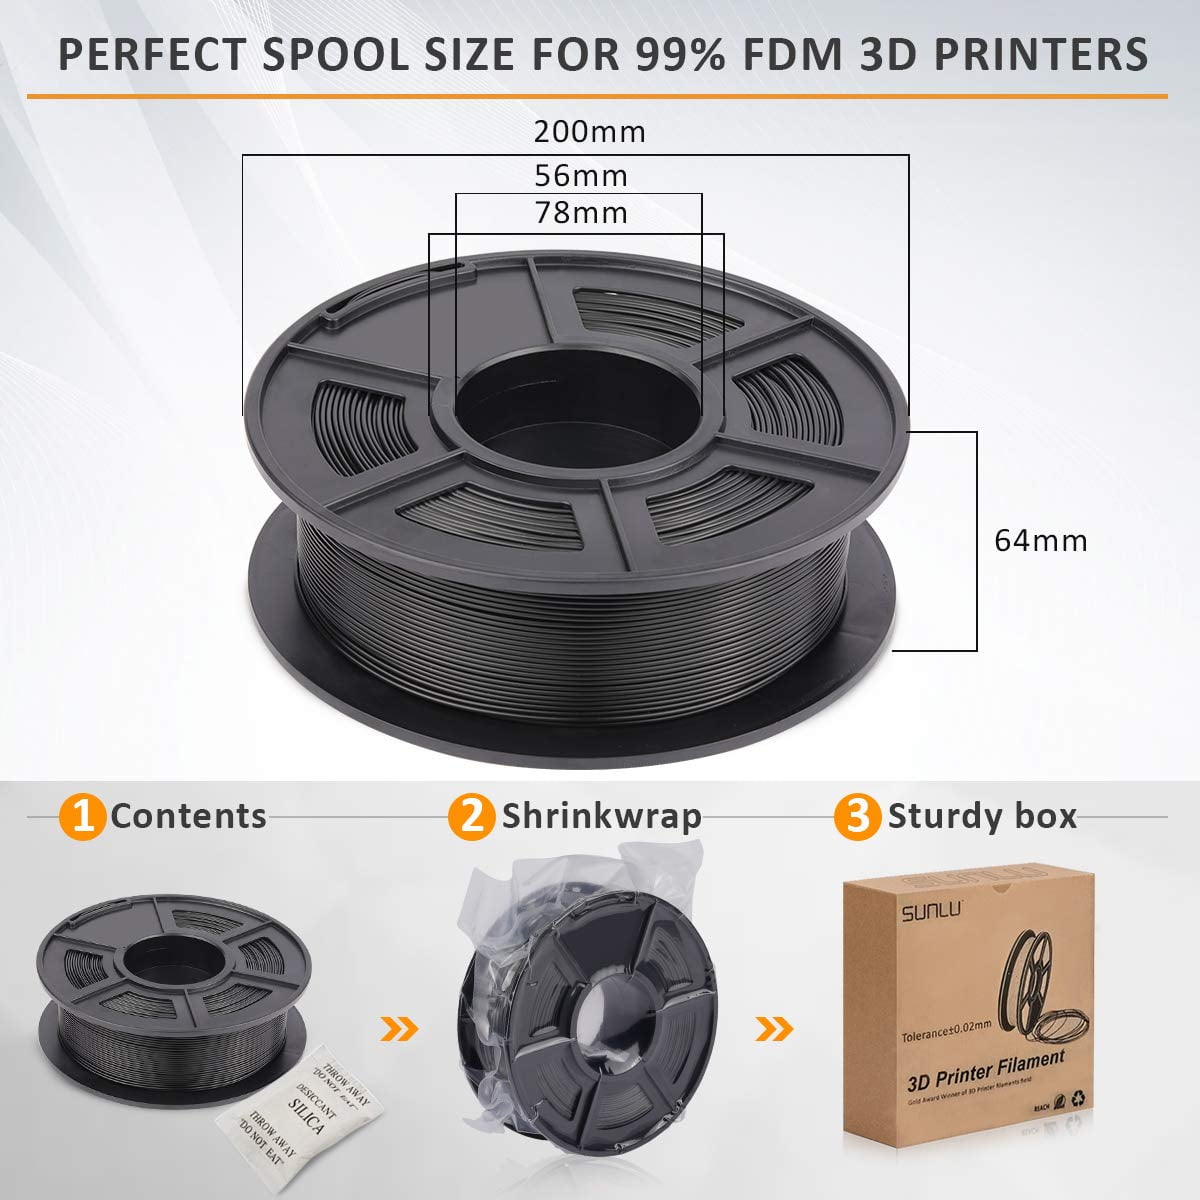 3D Printer Silk PLA Filament 1.75 Dimensional Accuracy +/- 0.02 mm 1KG Spool Silk PLA Black+Silver SUNLU 2 Colors Silk PLA 1.75mm of MasterSpool Fit FDM 3D Printer Pack of 2 